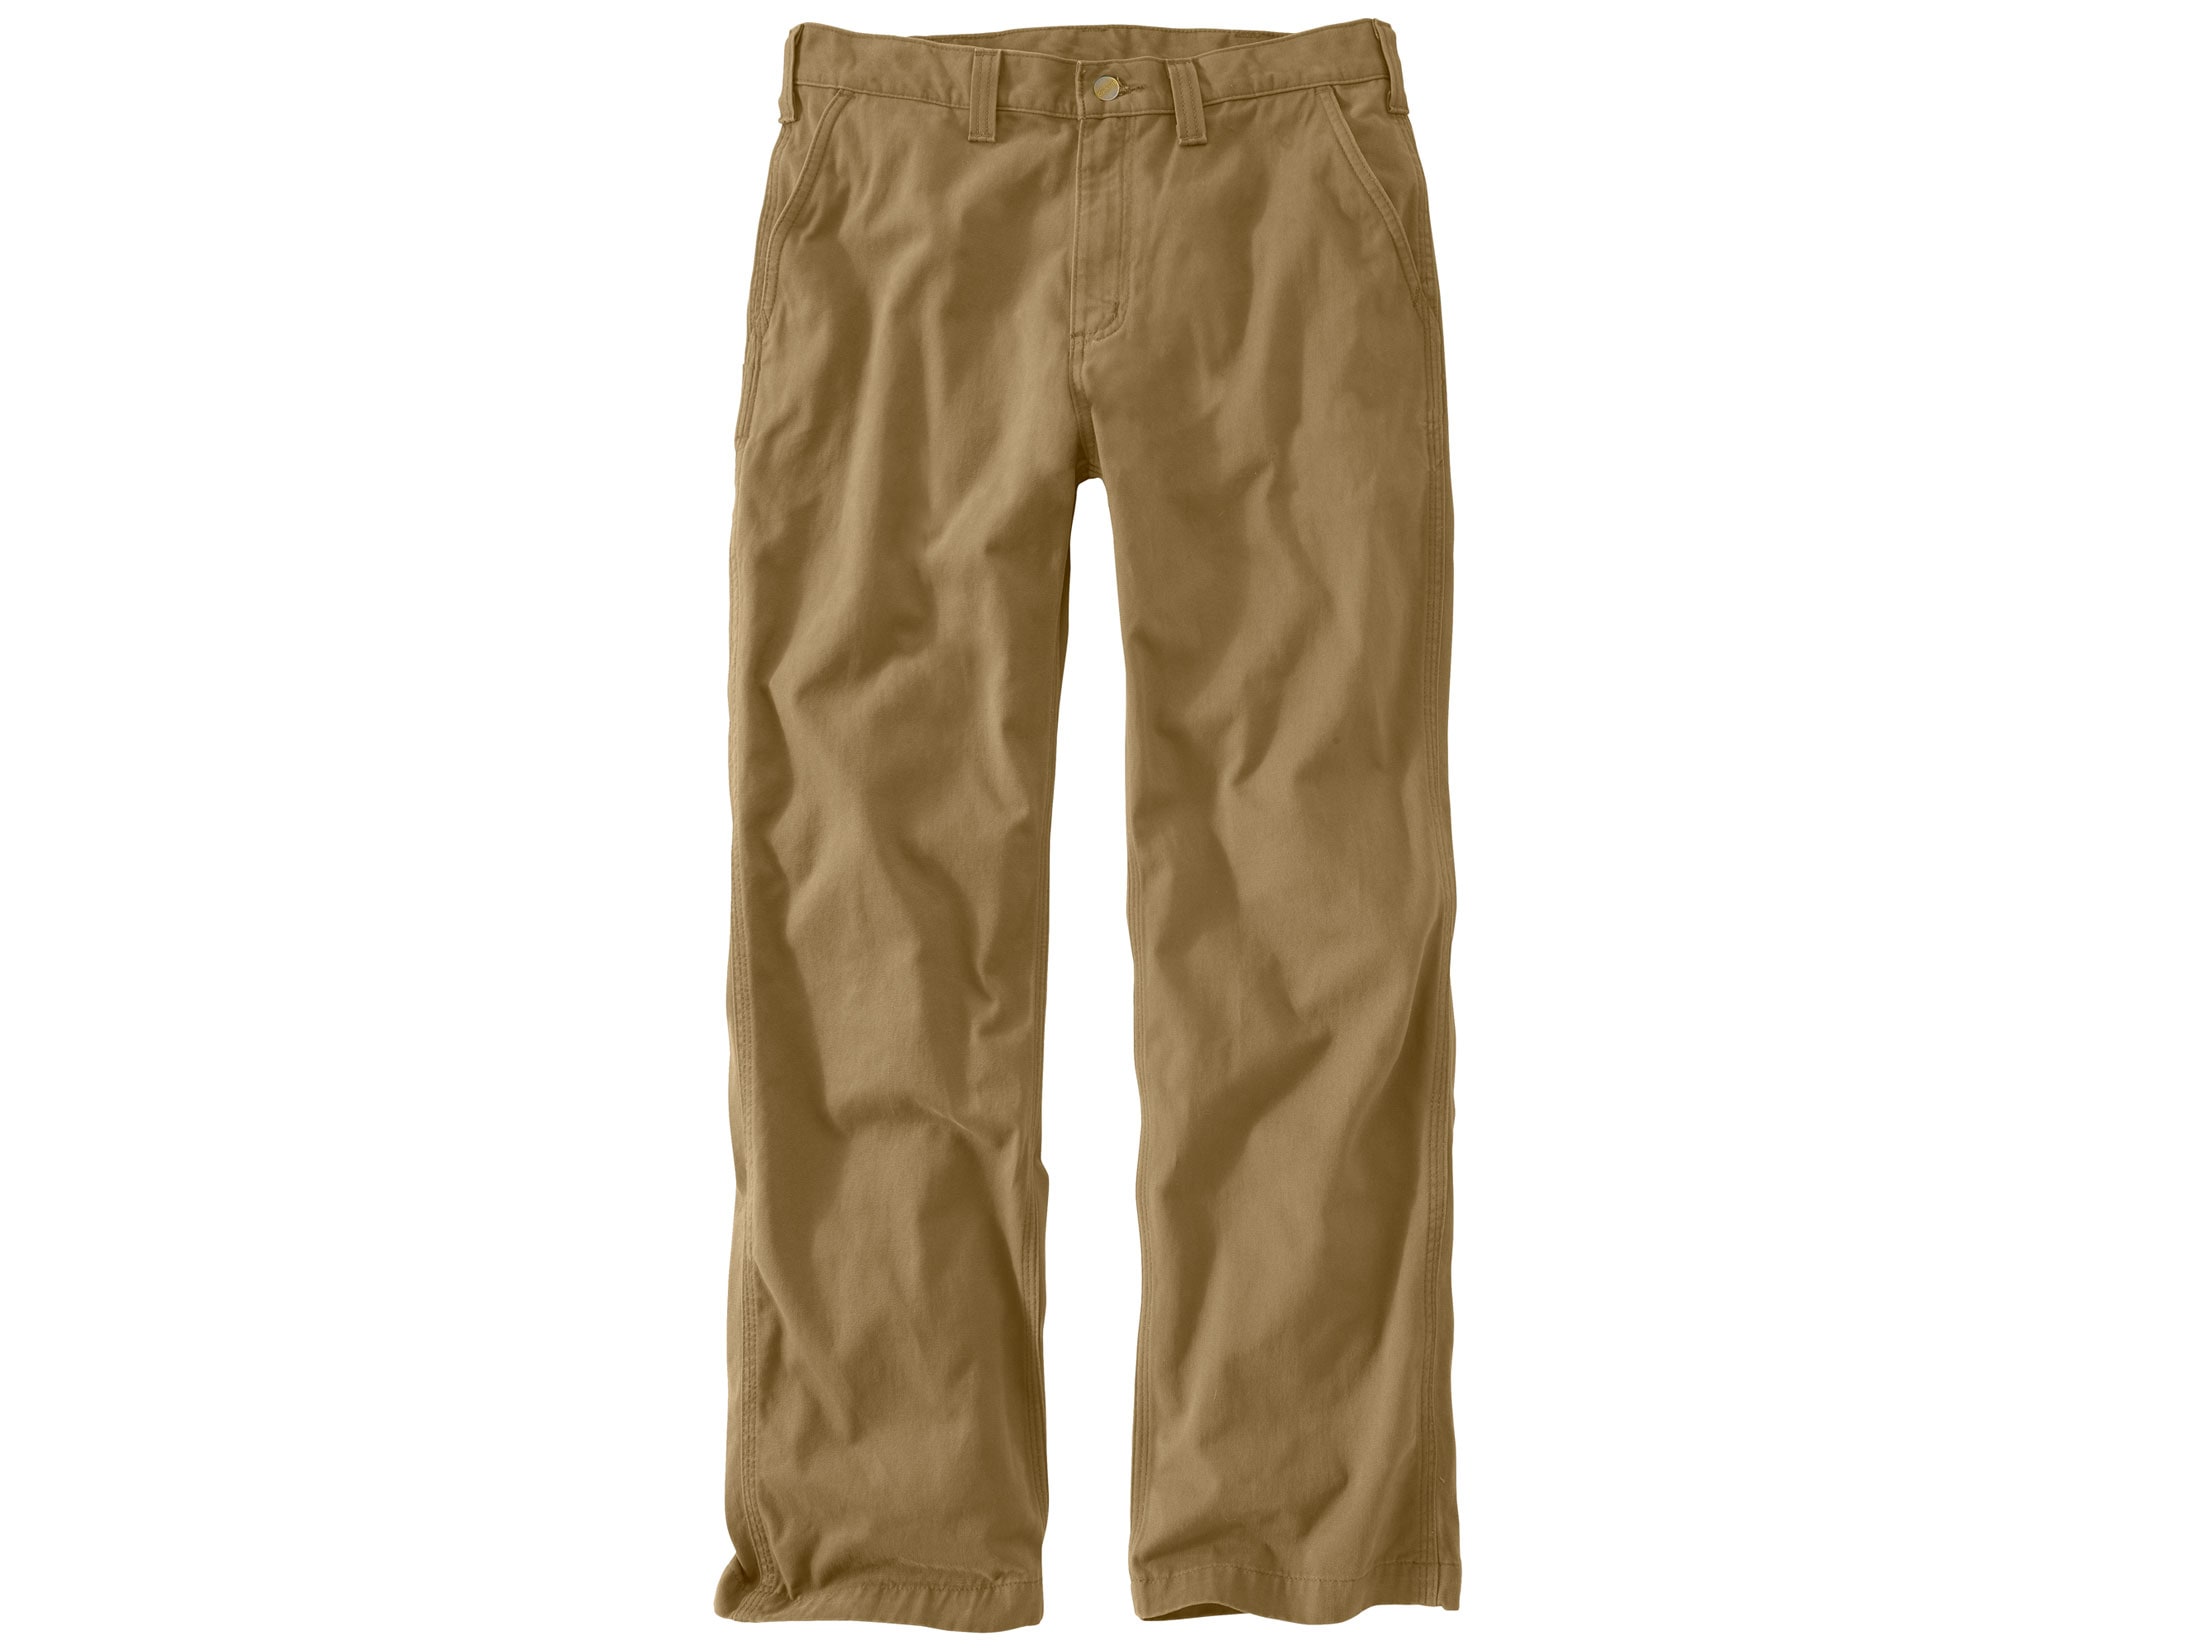 Carhartt Men's Rugged Work Khaki Relaxed Fit Pants Cotton Field Khaki